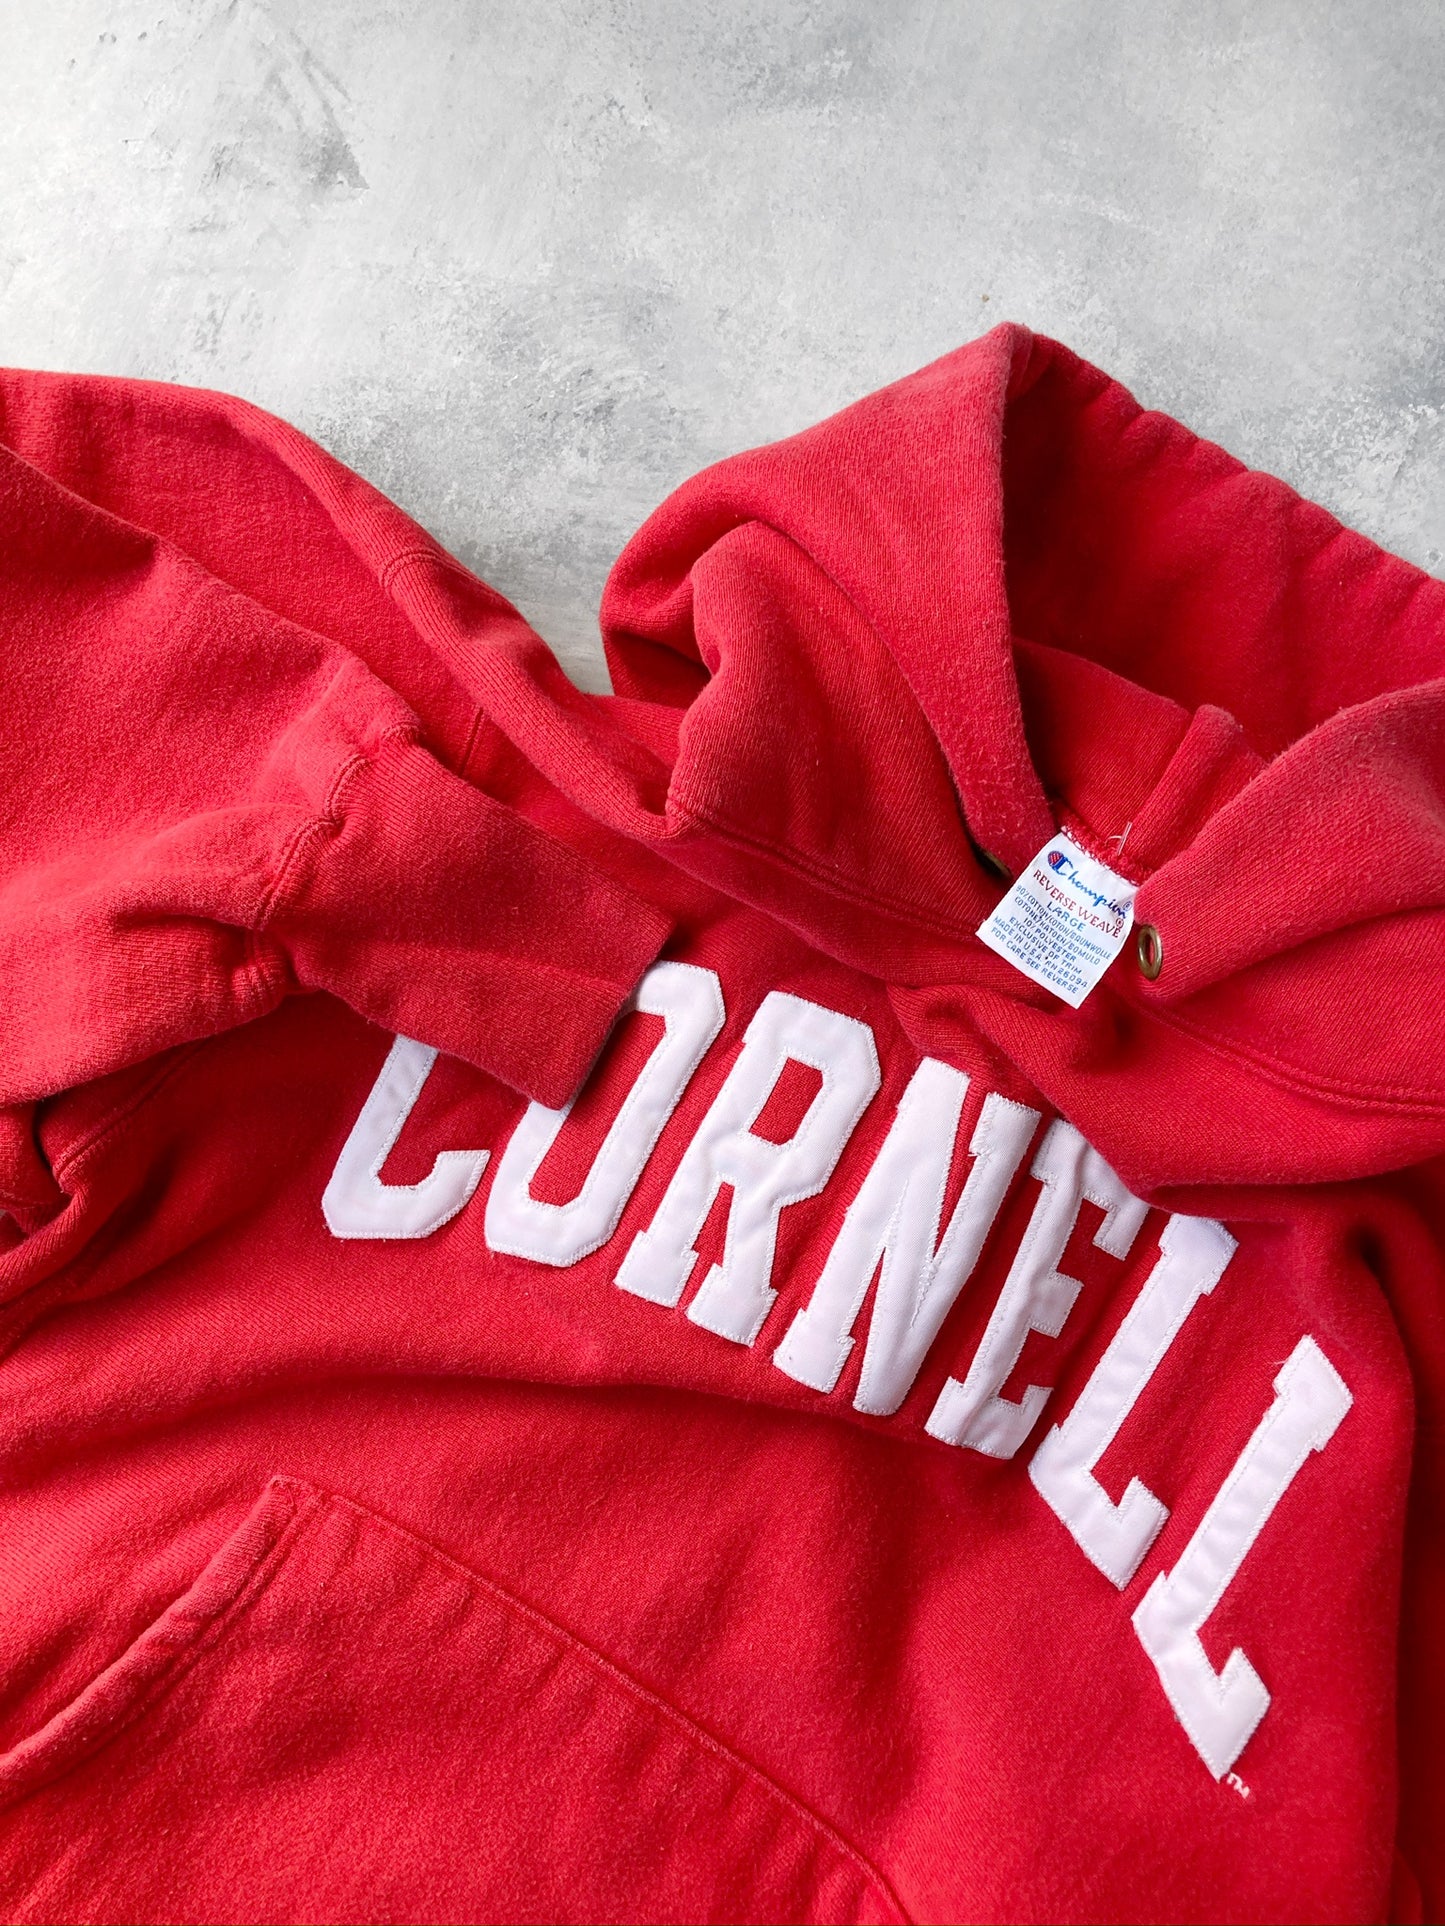 Cornell University Reverse Weave Hoodie 90's - Large